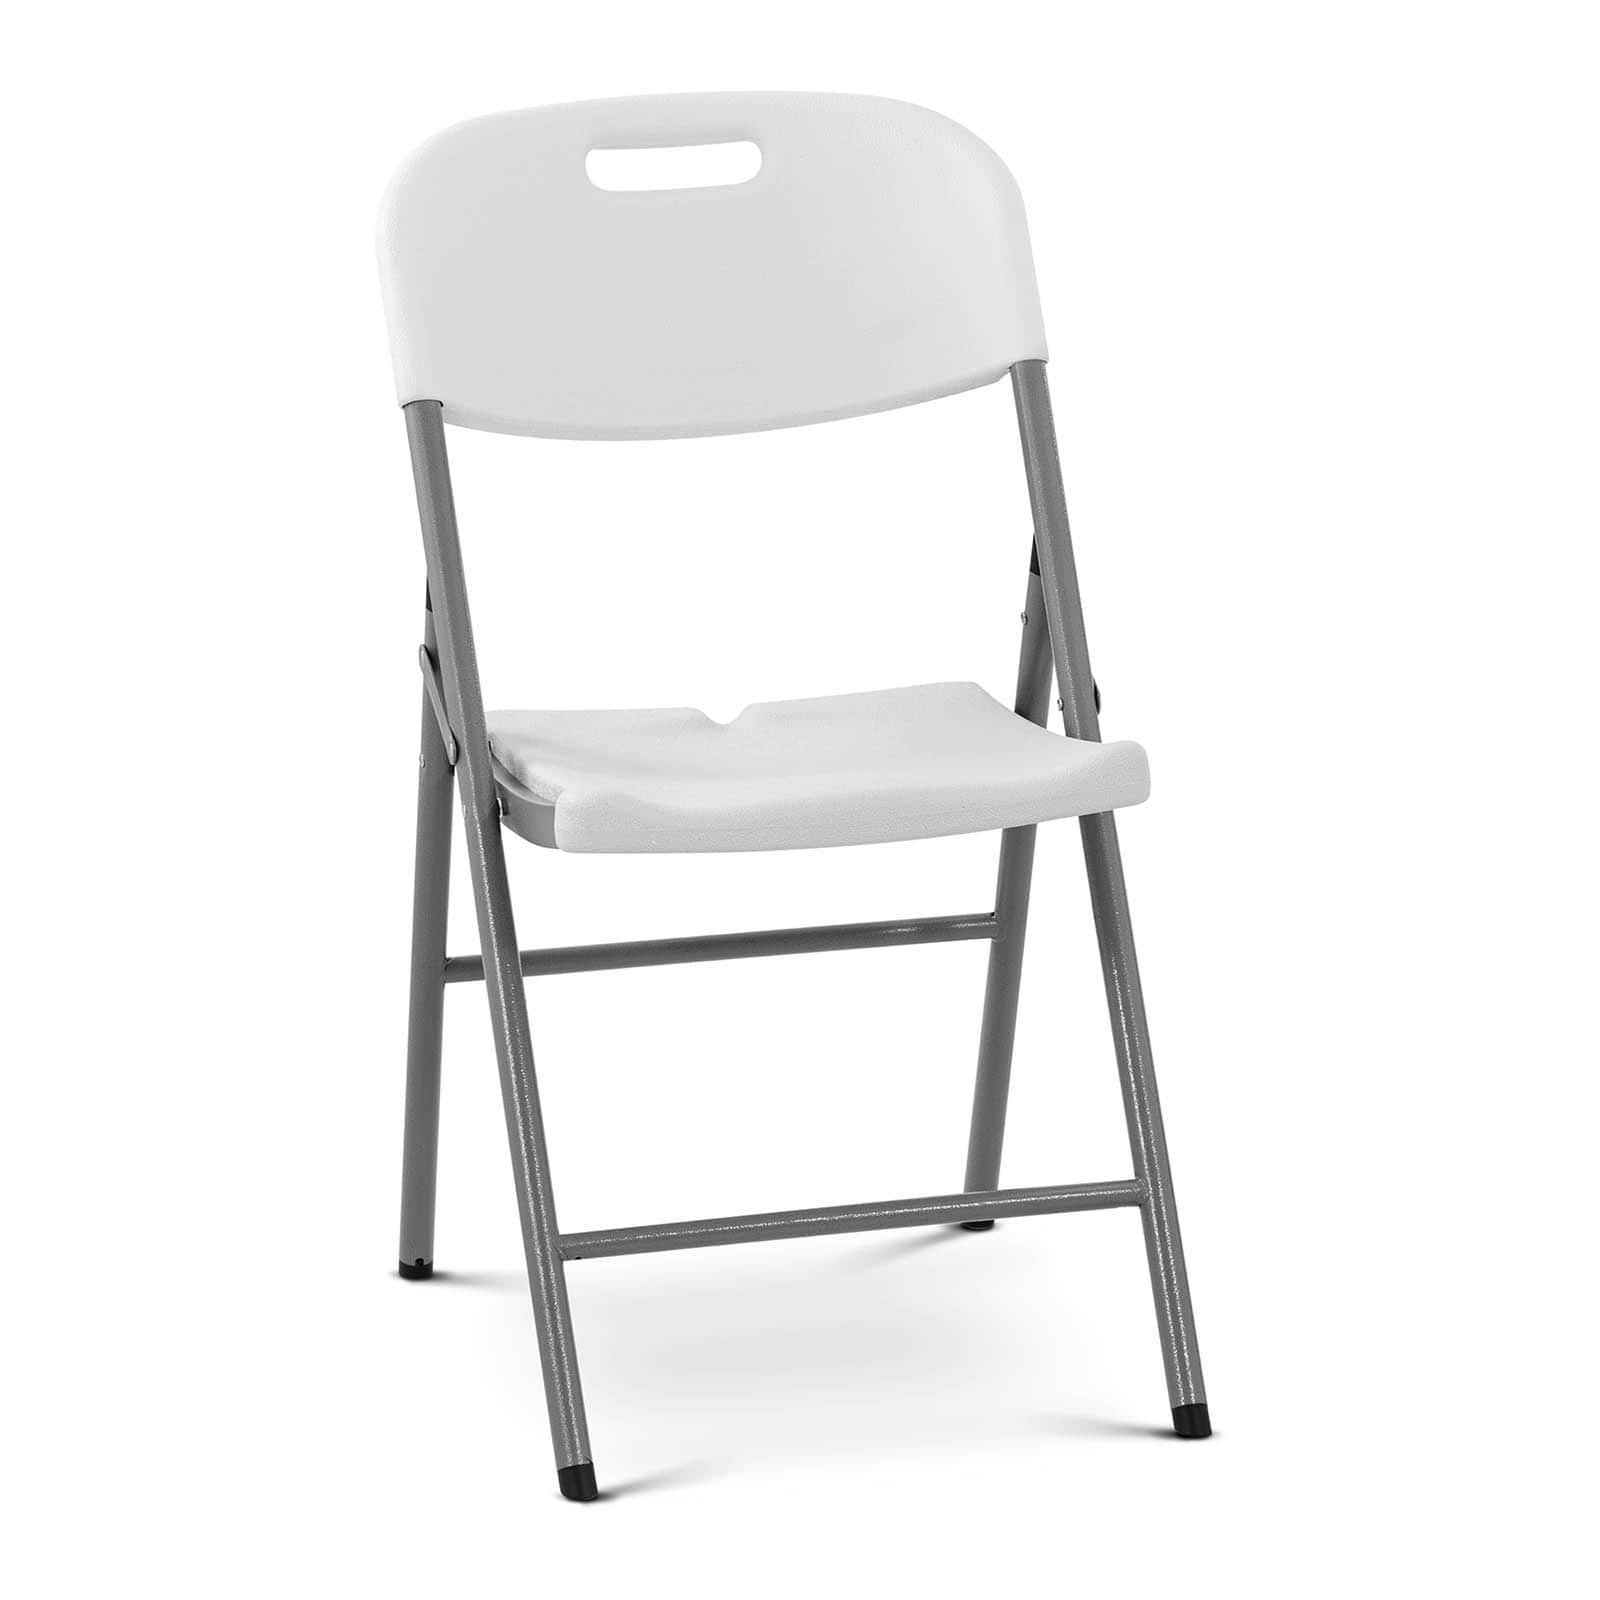 Royal Catering Faltstuhl Klappstuhl Faltstuhl Stuhl klappbar 180 kg Stahl Polyethylen weiß